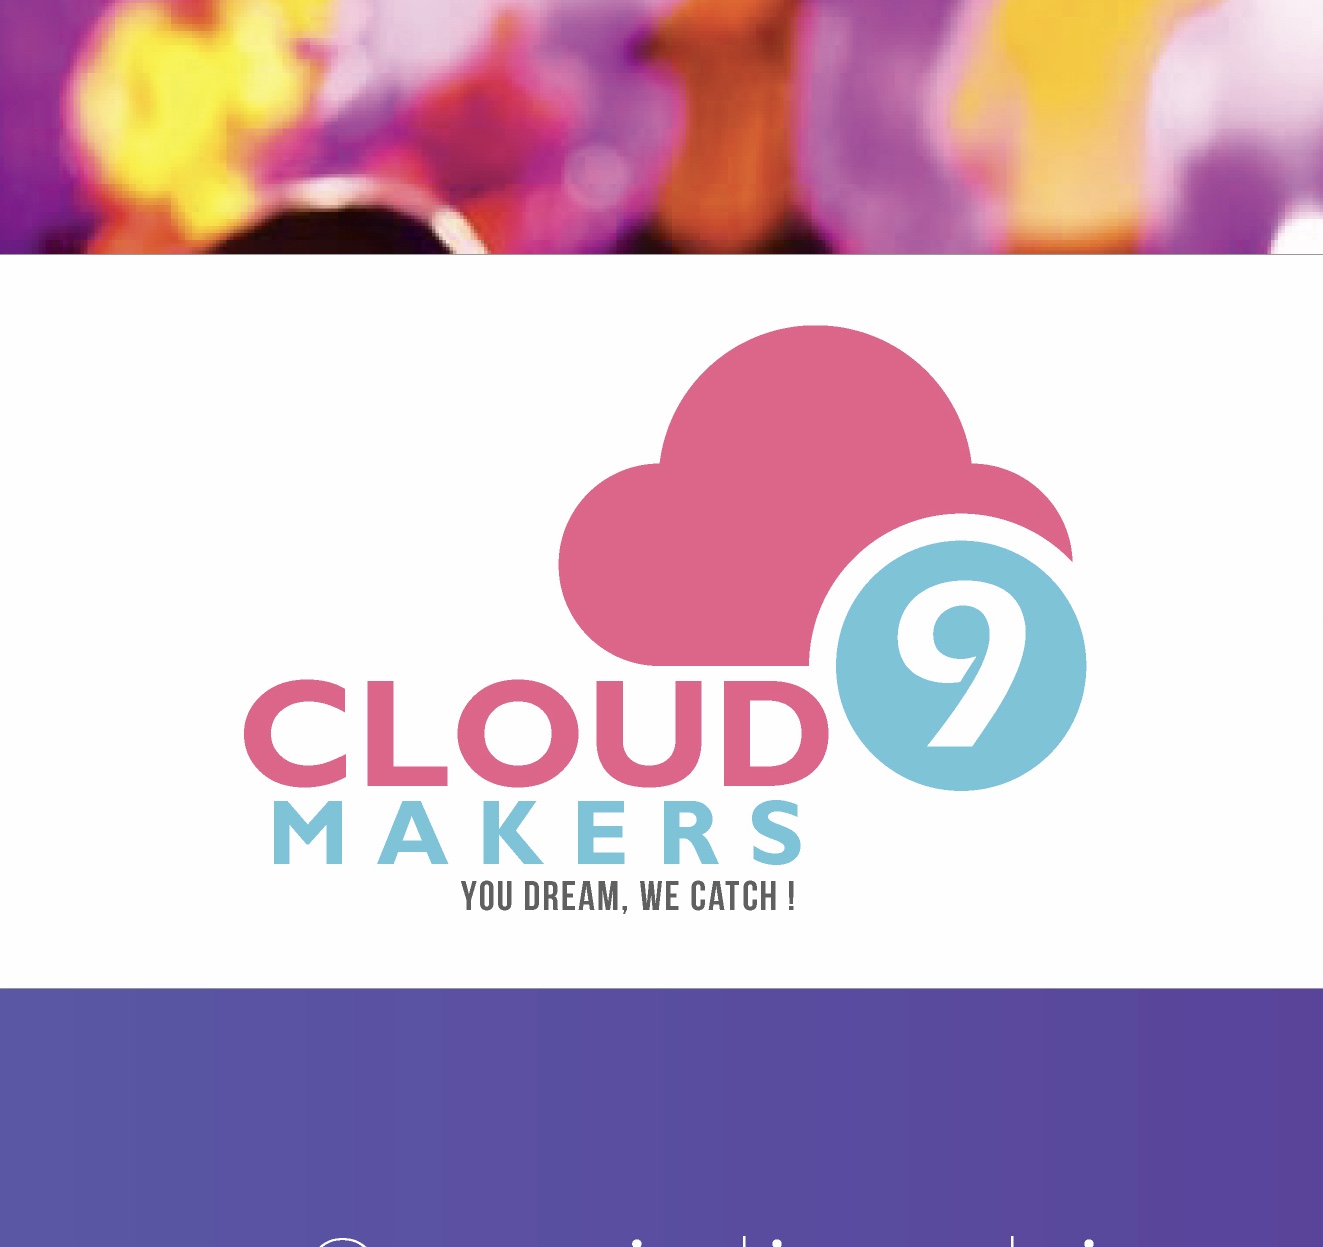 Prathyusha Davuluru: Cloud9Makers